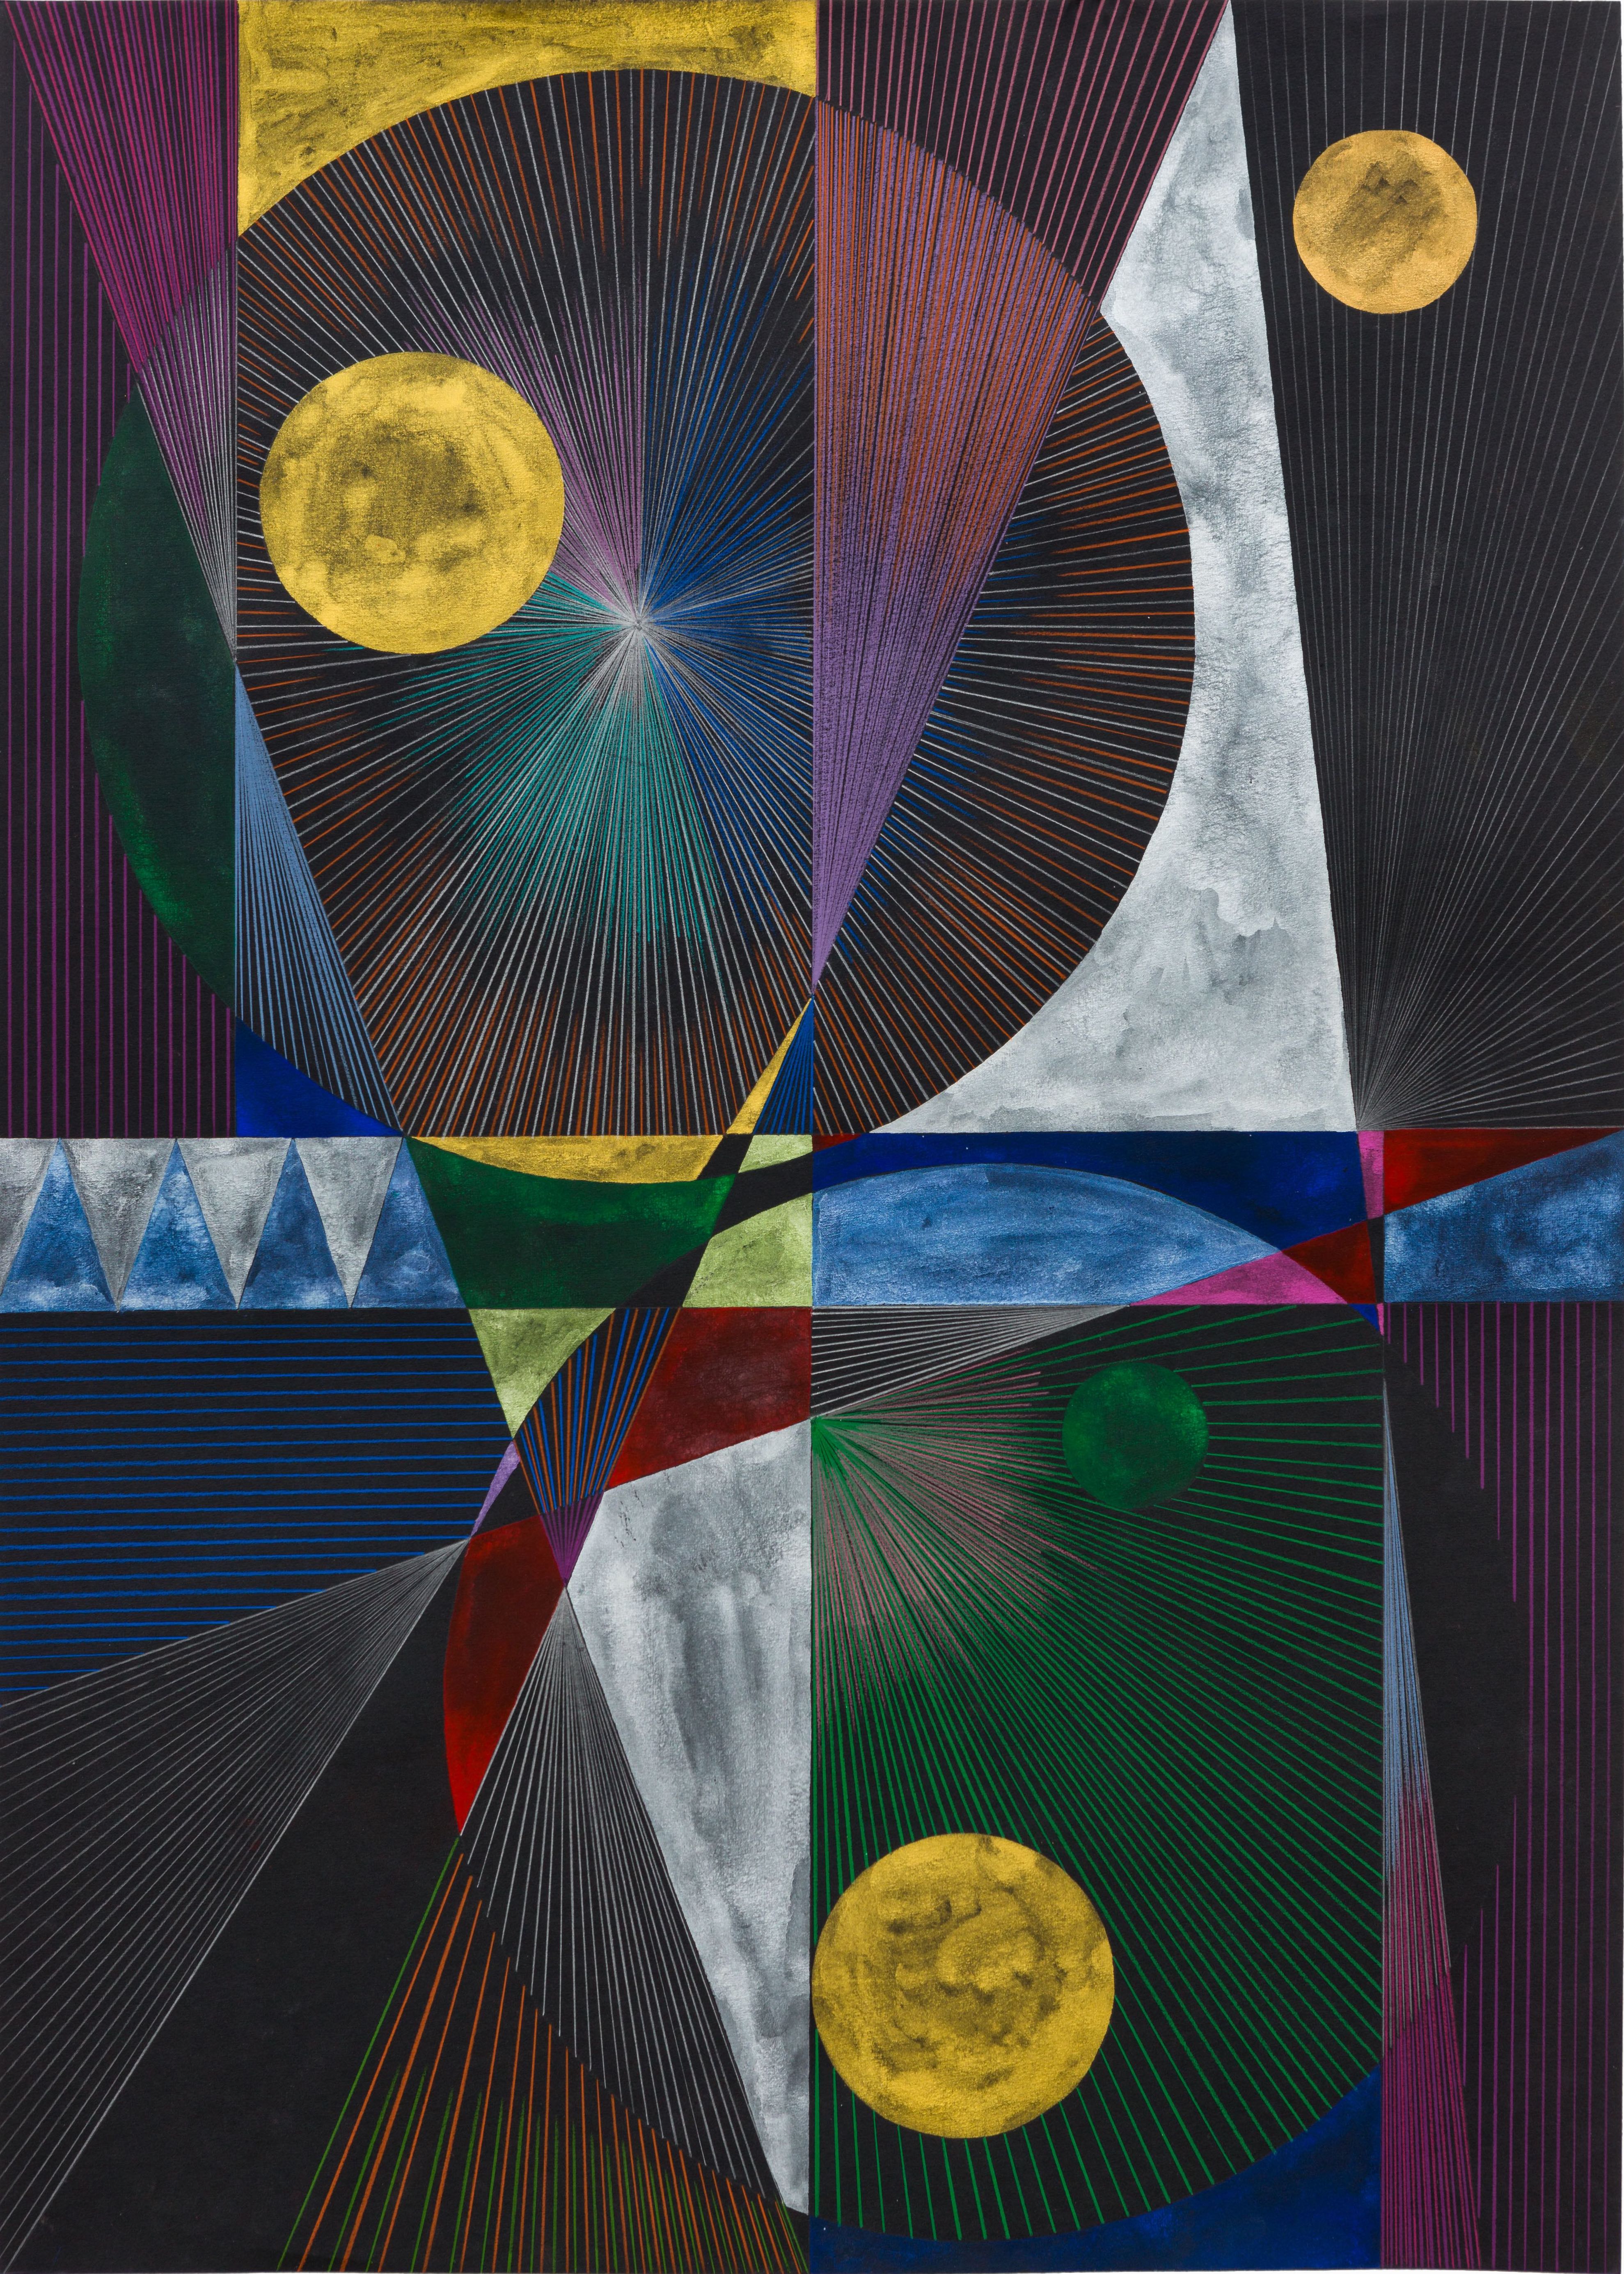 Lothar Götz 'The Four Seasons' image: 'Untitled' pencil, colour pencil and watercolour on paper, paper size: 105×75cm, 2022, photograph by Michael Franke